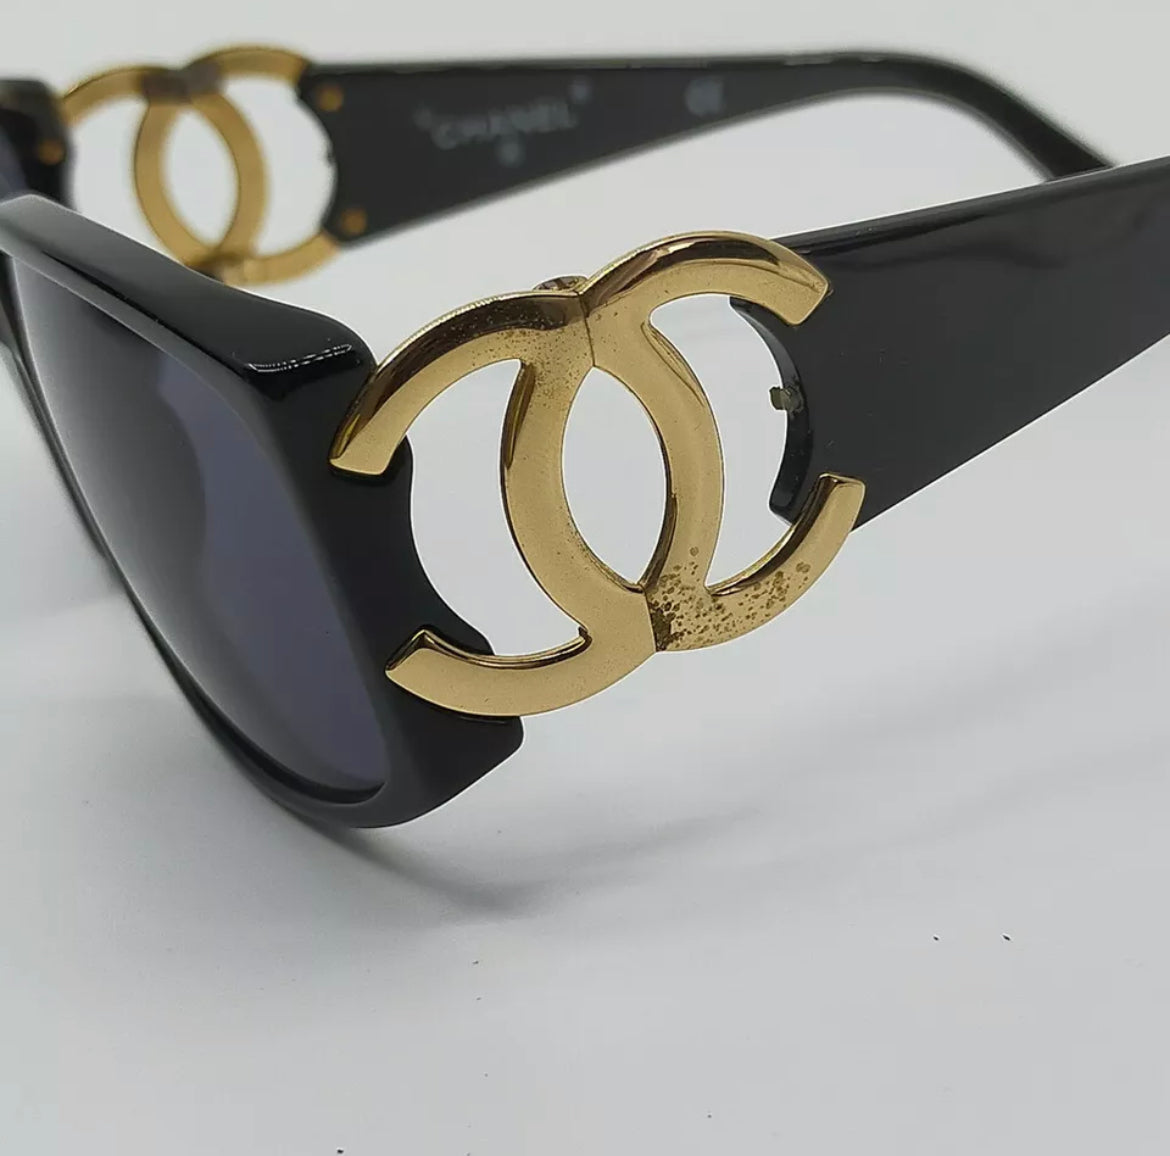 Chanel sunglasses design - Gem